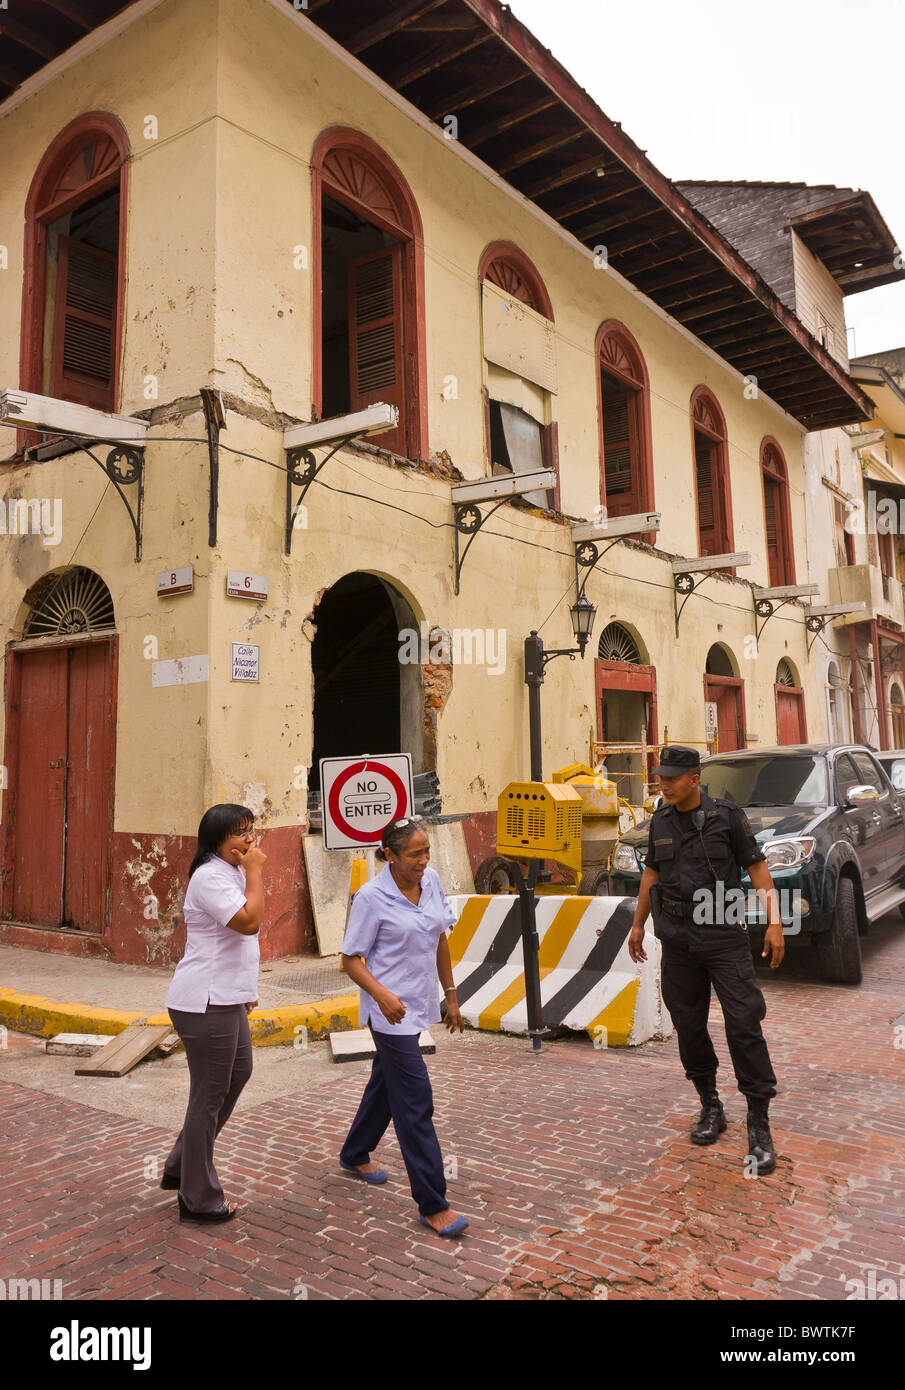 PANAMA CITY, PANAMA - People on street corner, Calle Santos Jorge, in Casco Viejo, historic city center. Stock Photo